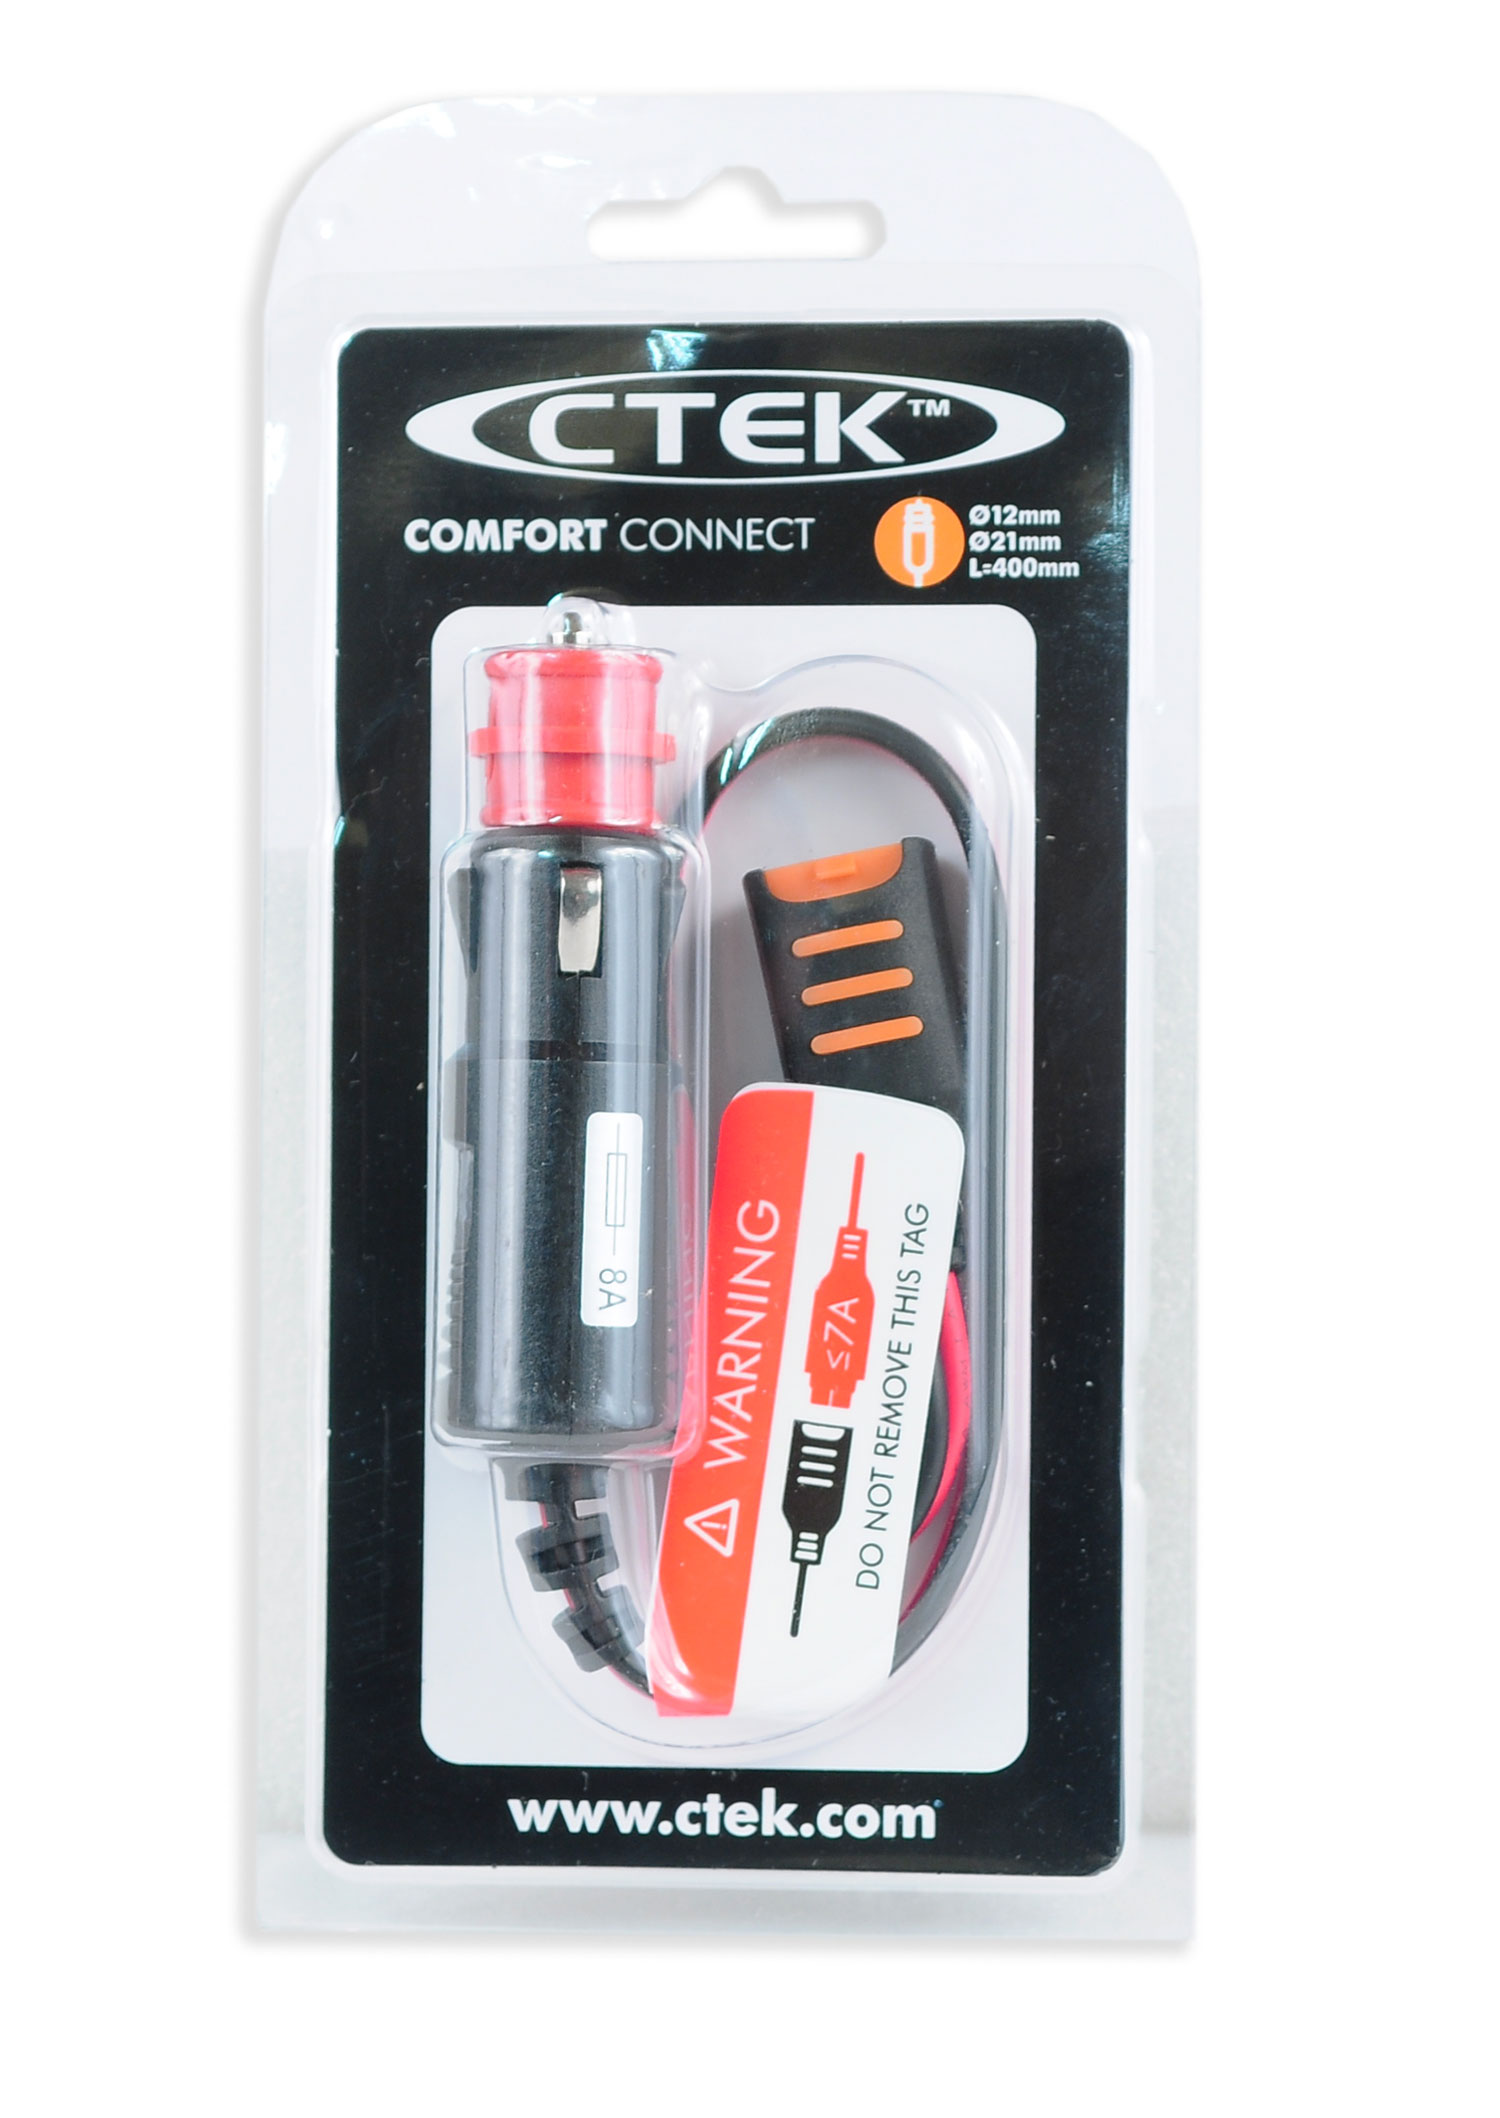 Ctek Comfort Connect Cig56263 Zigarettenanzünder-Kabel